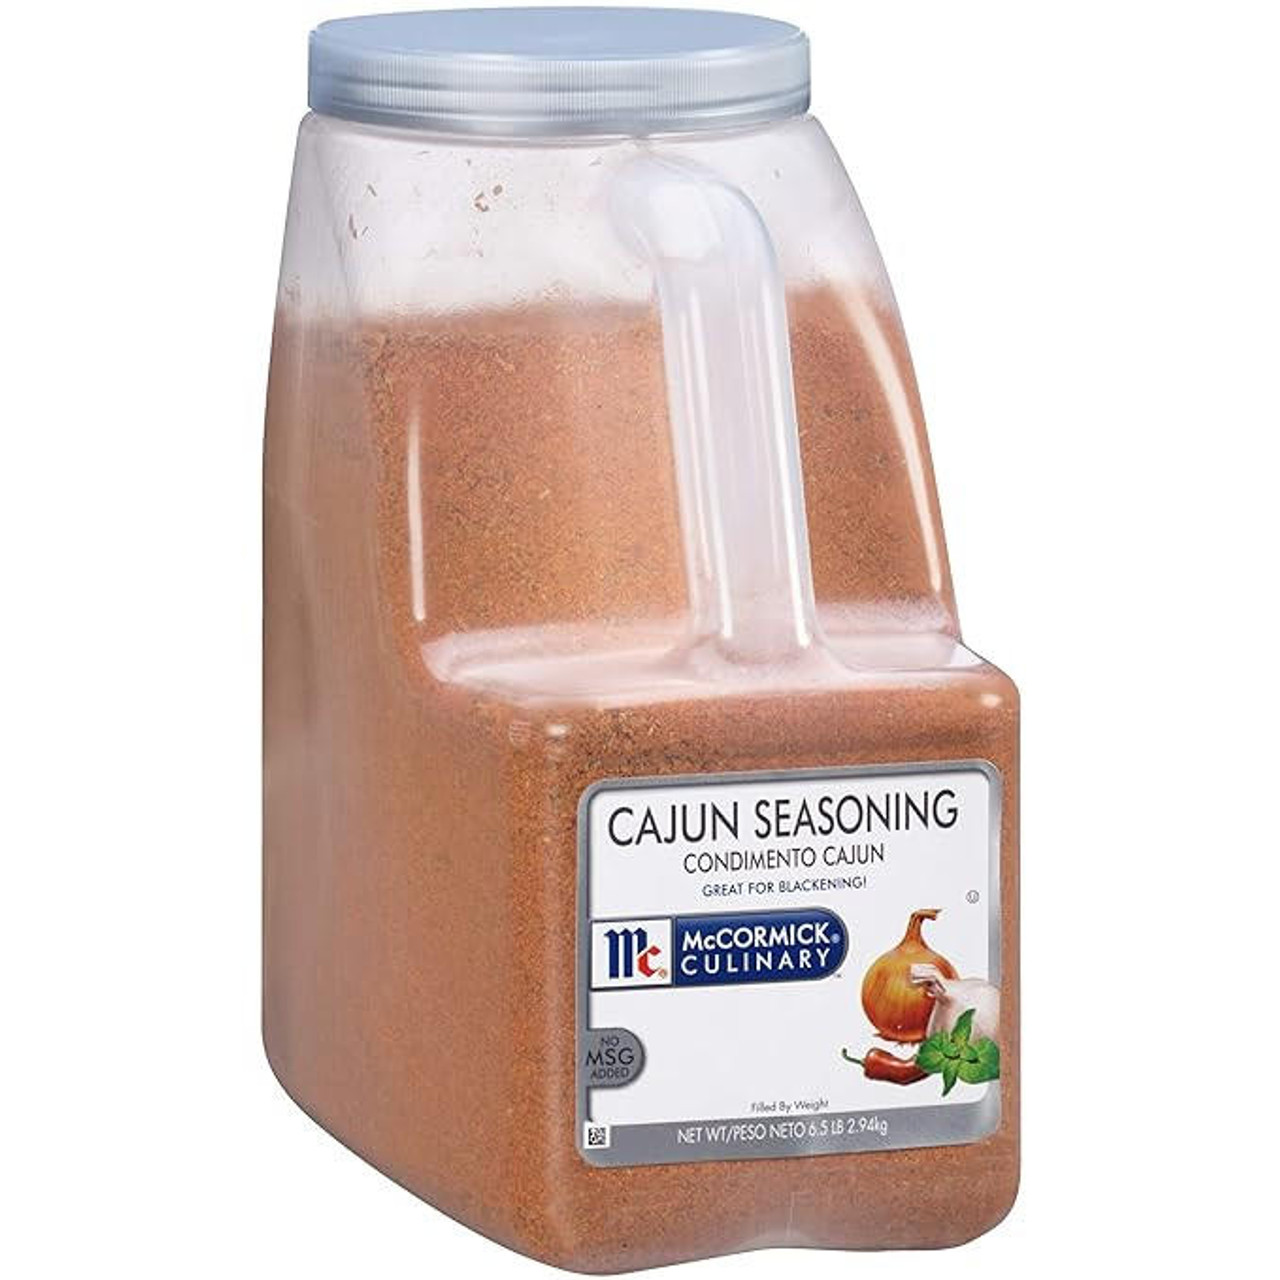 MCCORMICKS McCormick Culinary 6.5 lb. Cajun Seasoning (4/Case) - Spicy-Hot Blend 